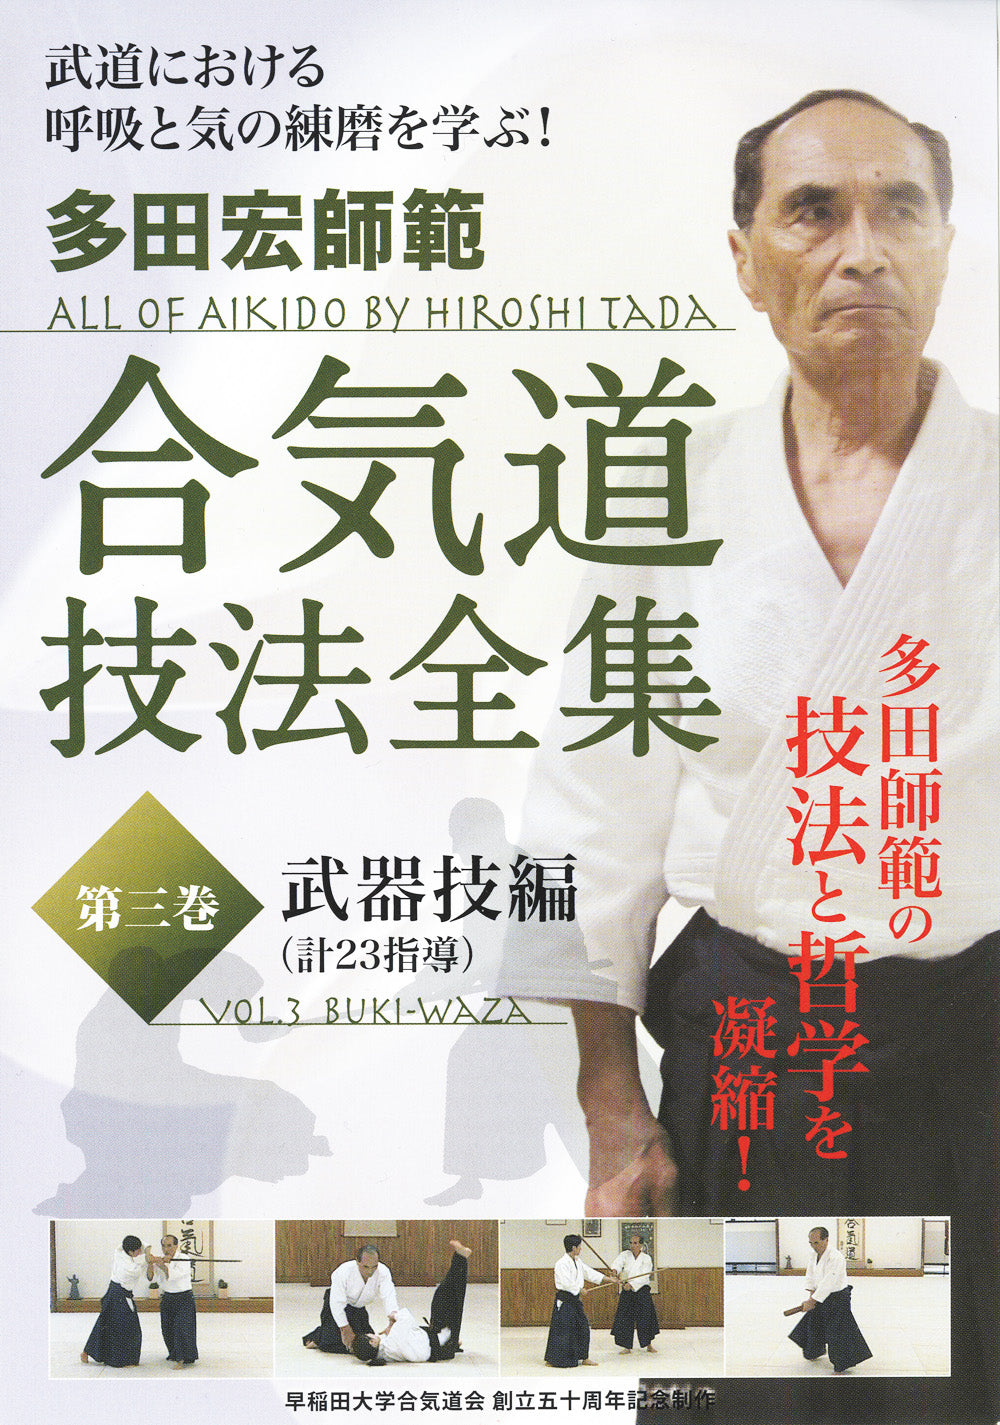 All of Aikido by Hiroshi Tada DVD 3: Buki Waza